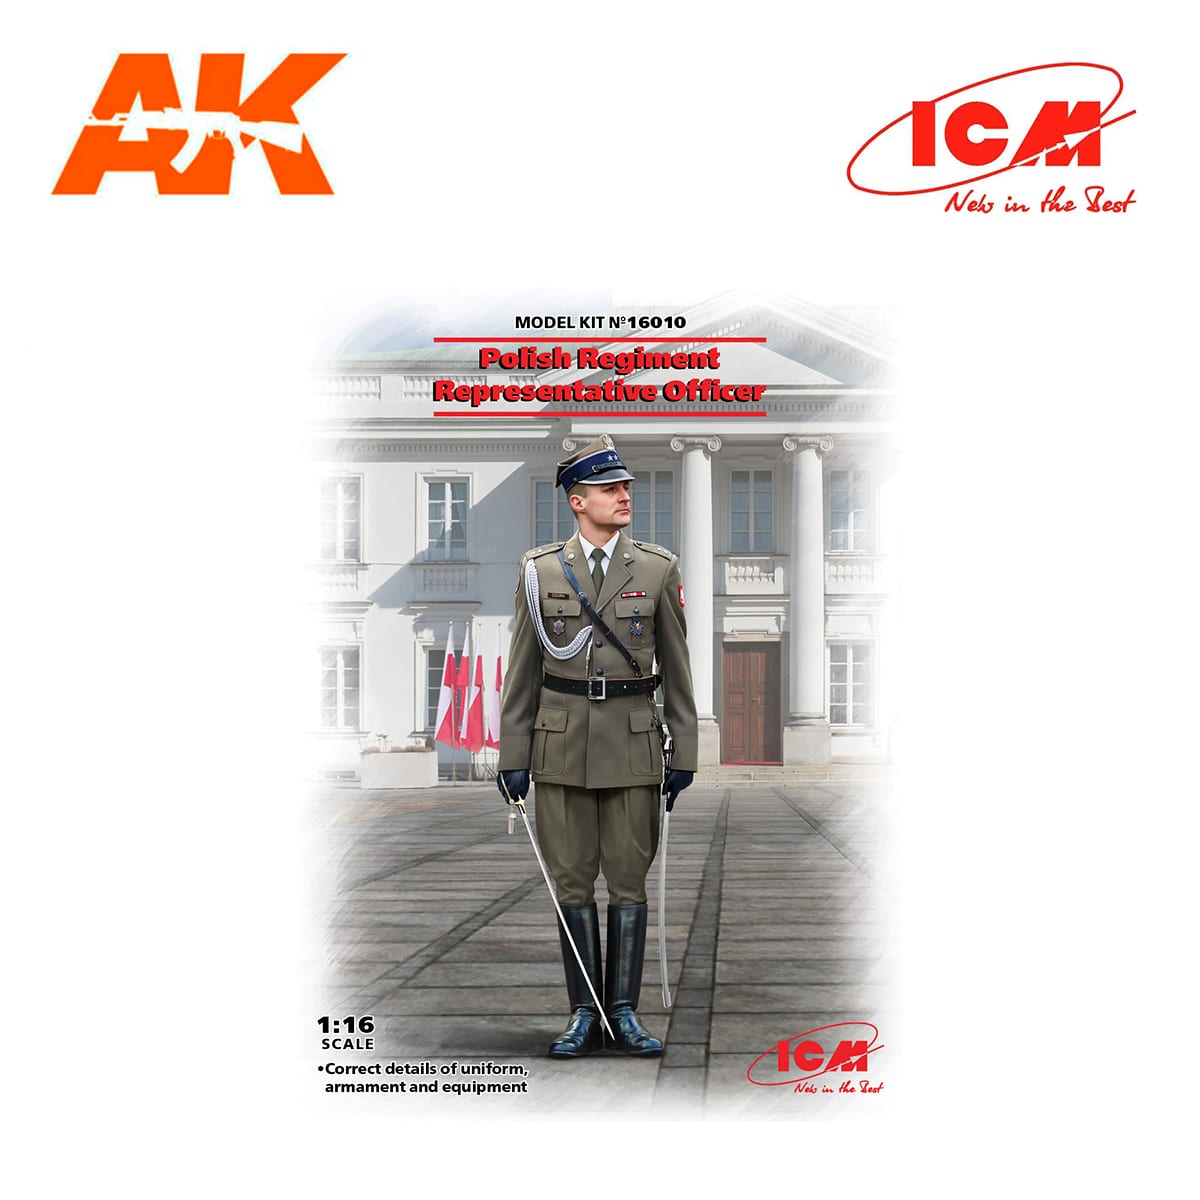 Polish Regiment Representative Officer (100% new molds) 1/16